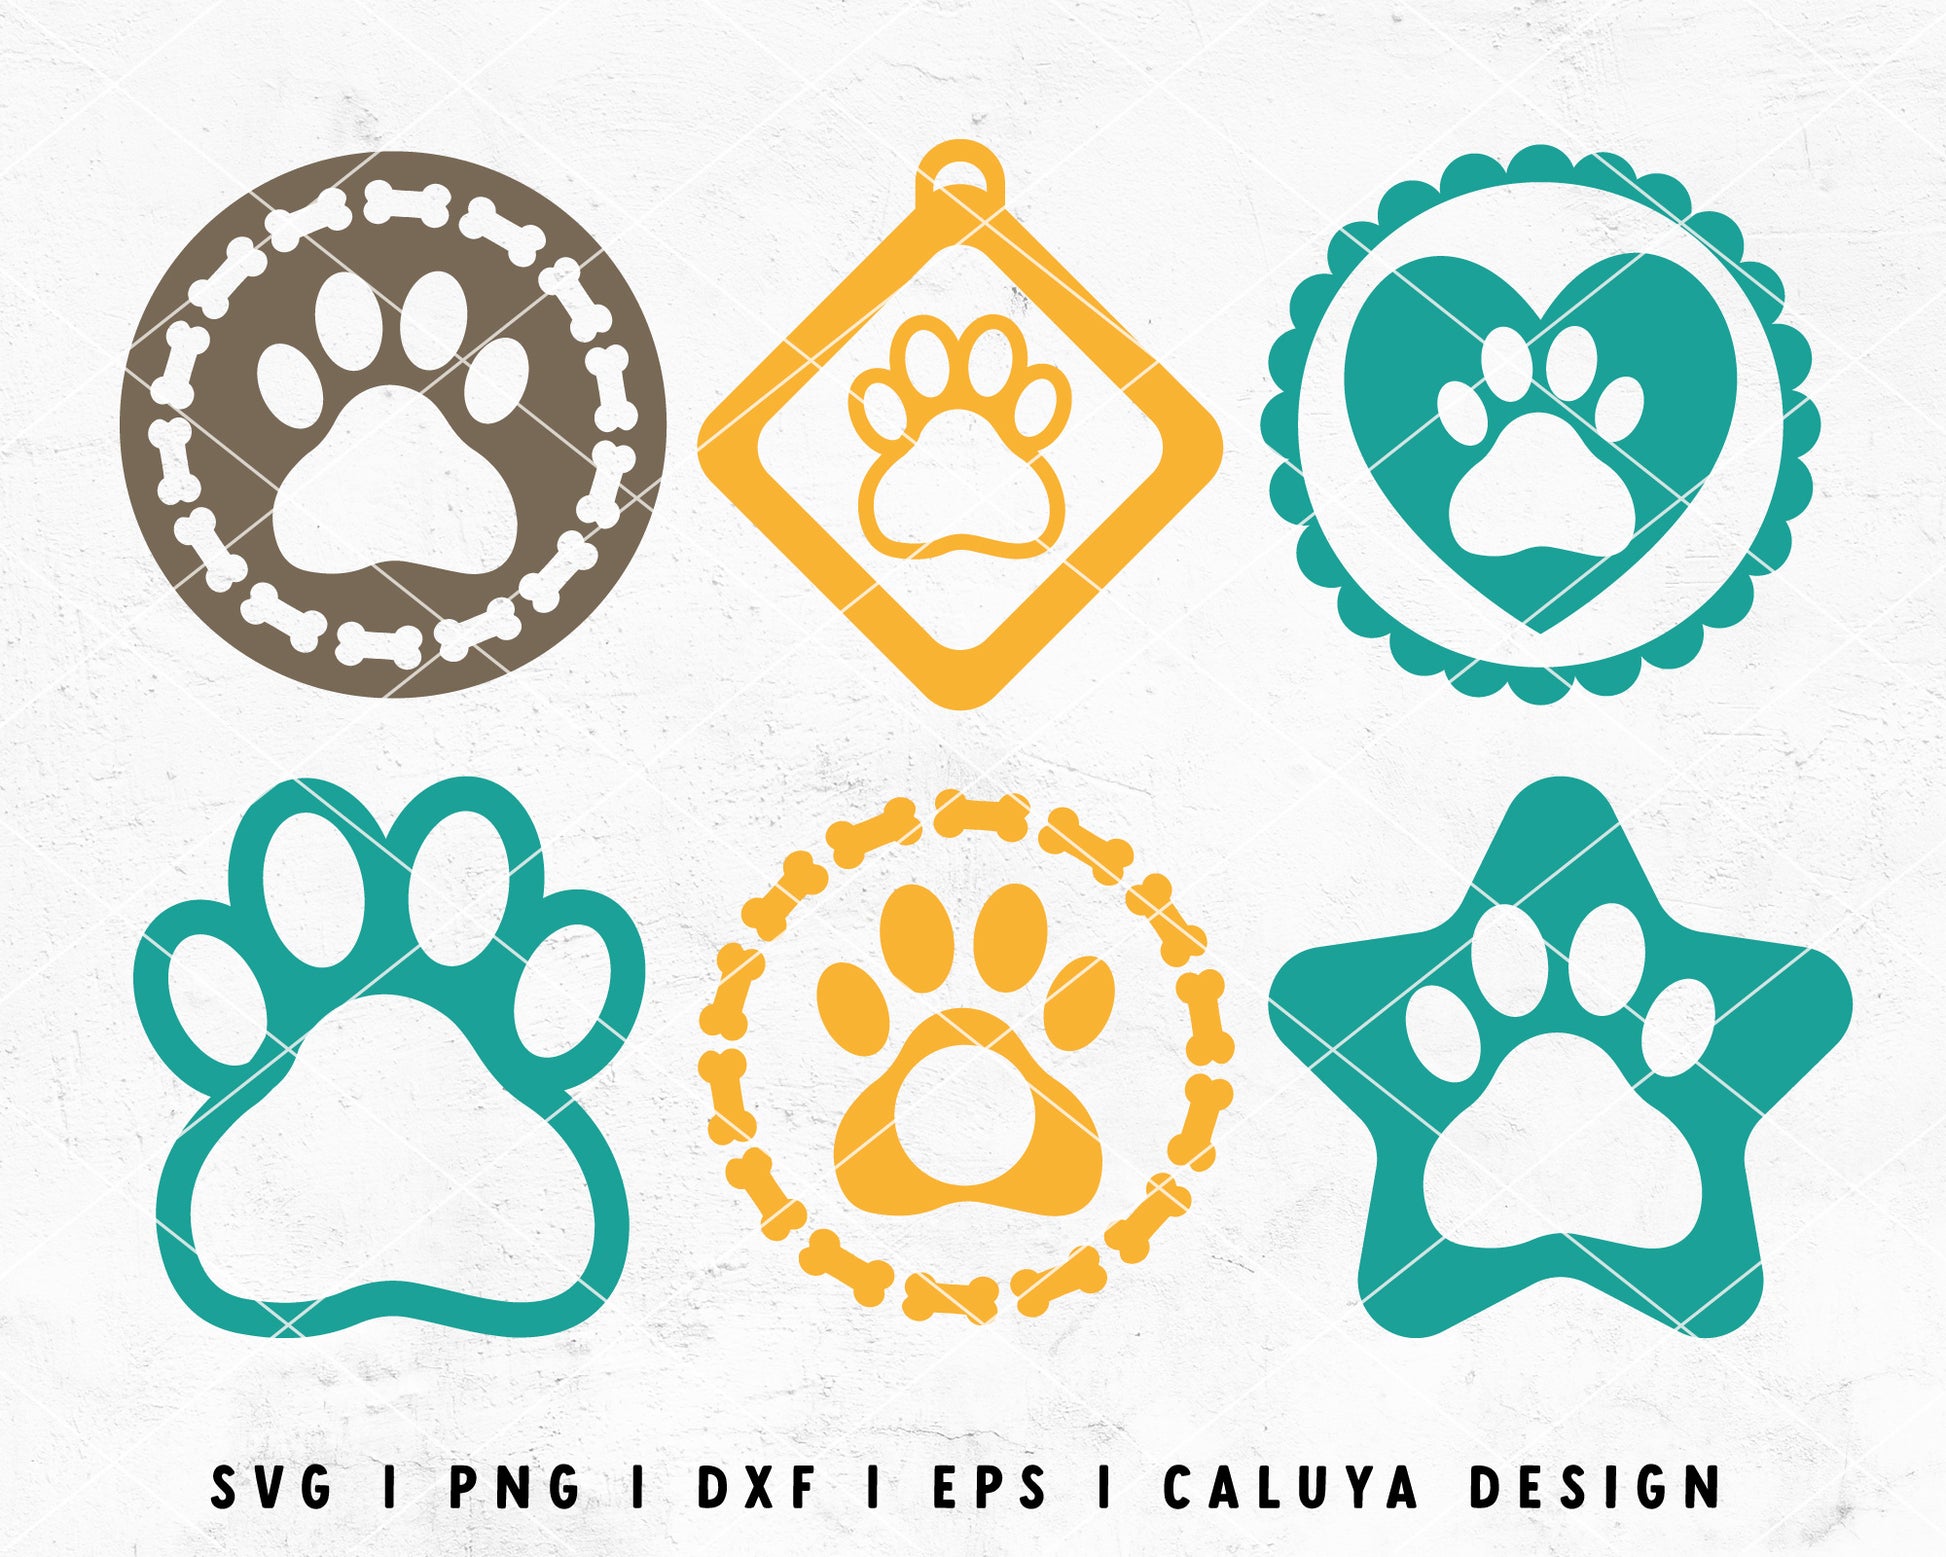 FREE Dog Paw SVG | Paw Print SVG | Monogram SVG Cut File for Cricut, Cameo Silhouette | Free SVG Cut File